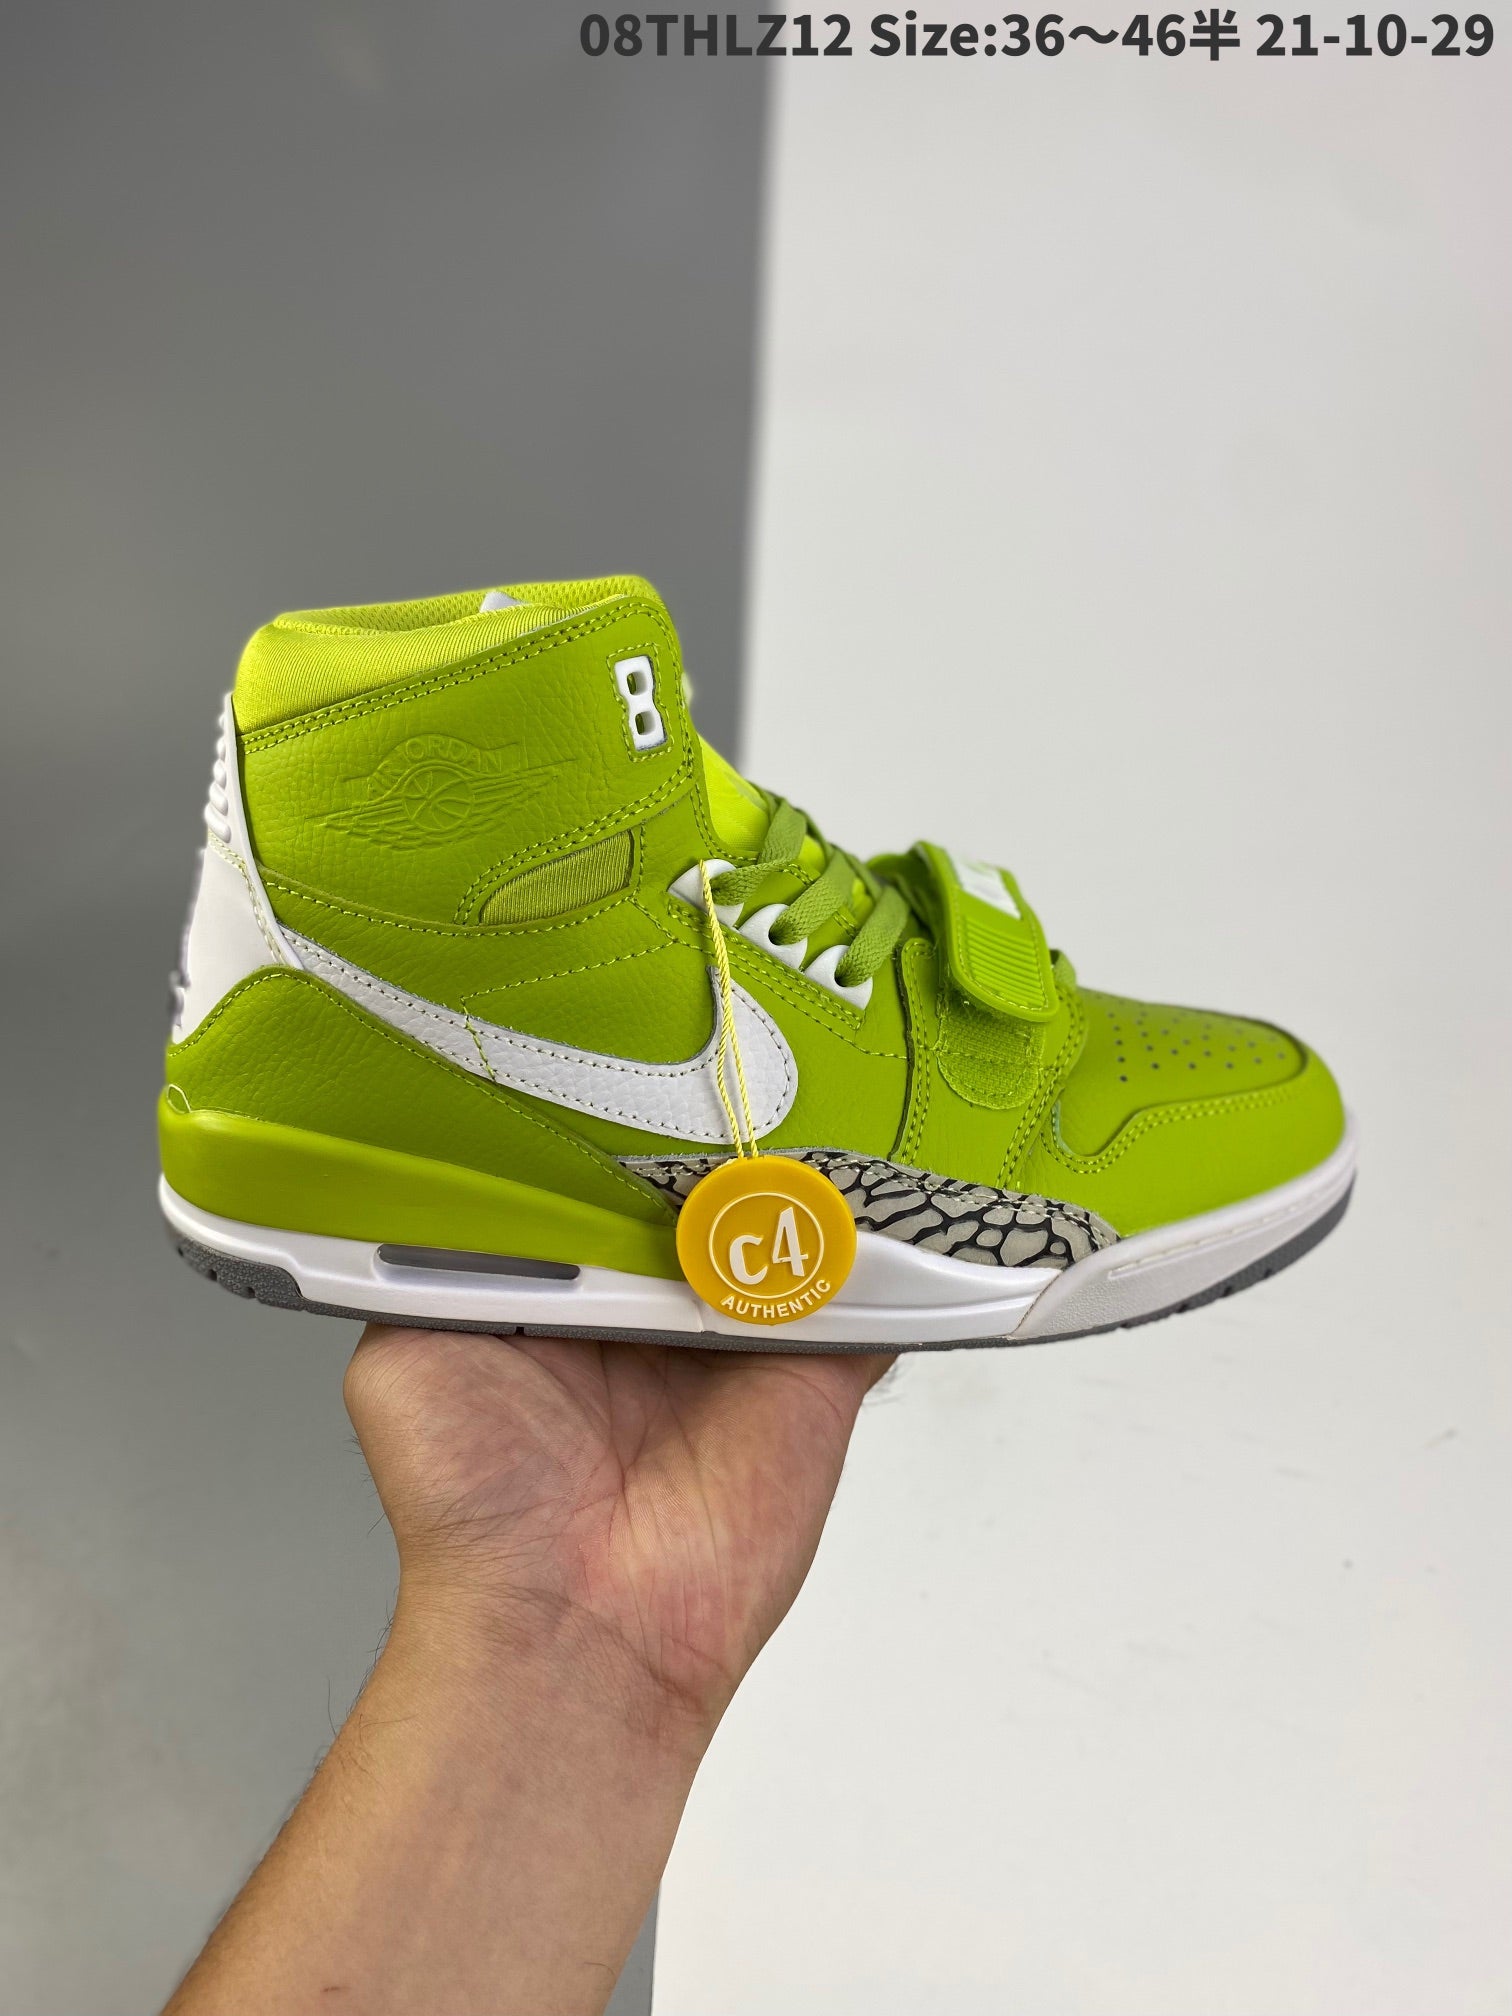 Air Jordan Legacy 312 Running Shoes Fashion Sneakers Men's a